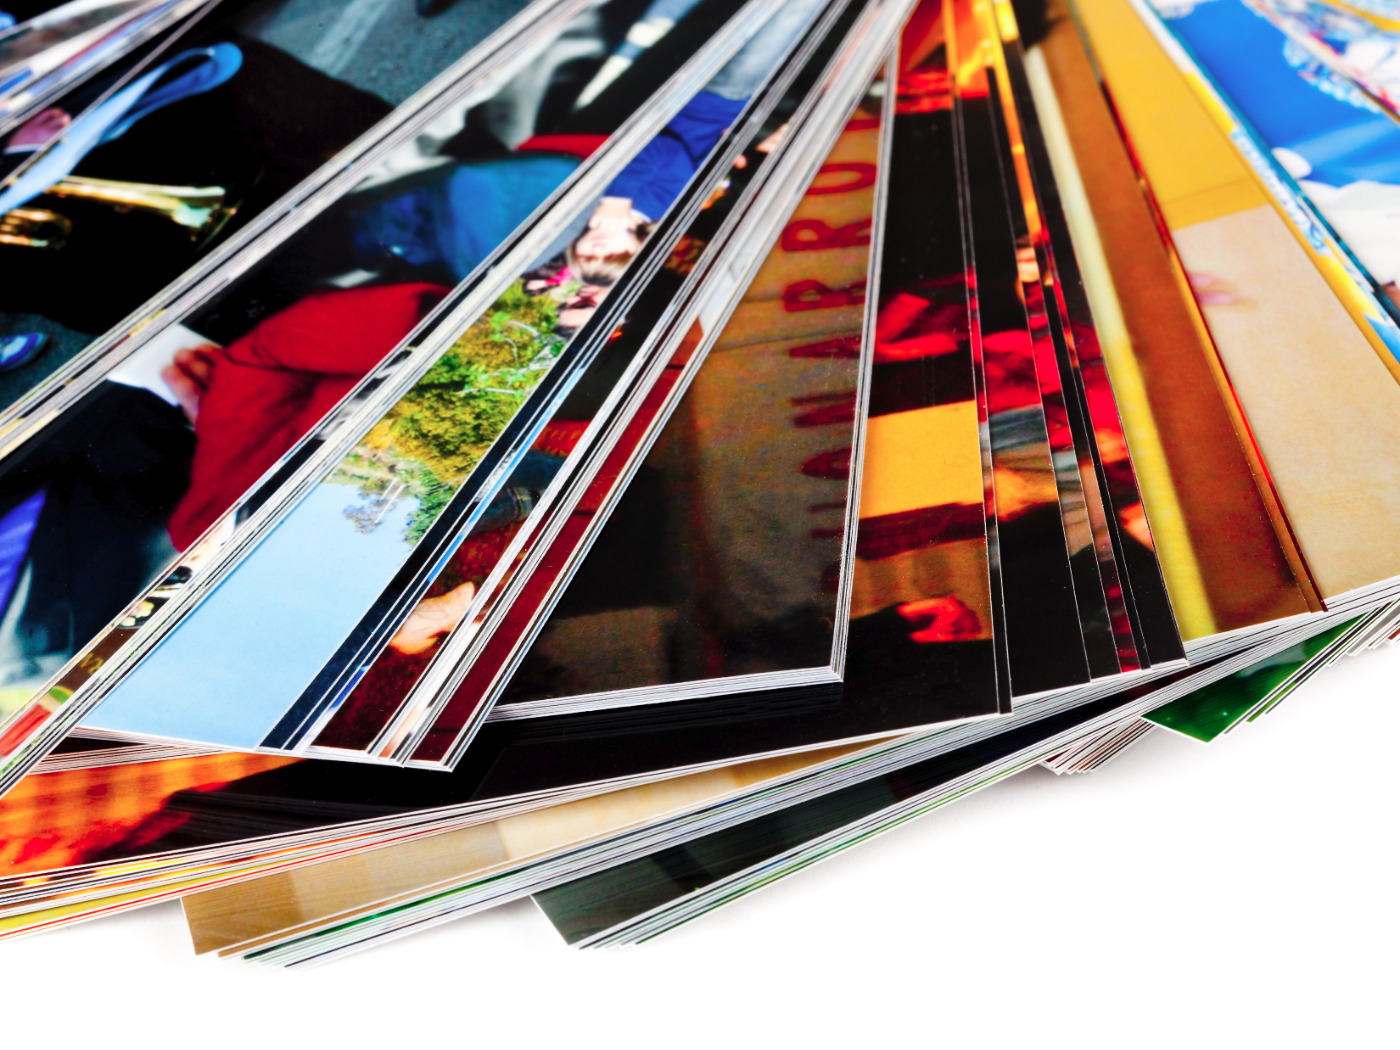 Examples of Printed Marketing Materials Alt Media Studios can provide